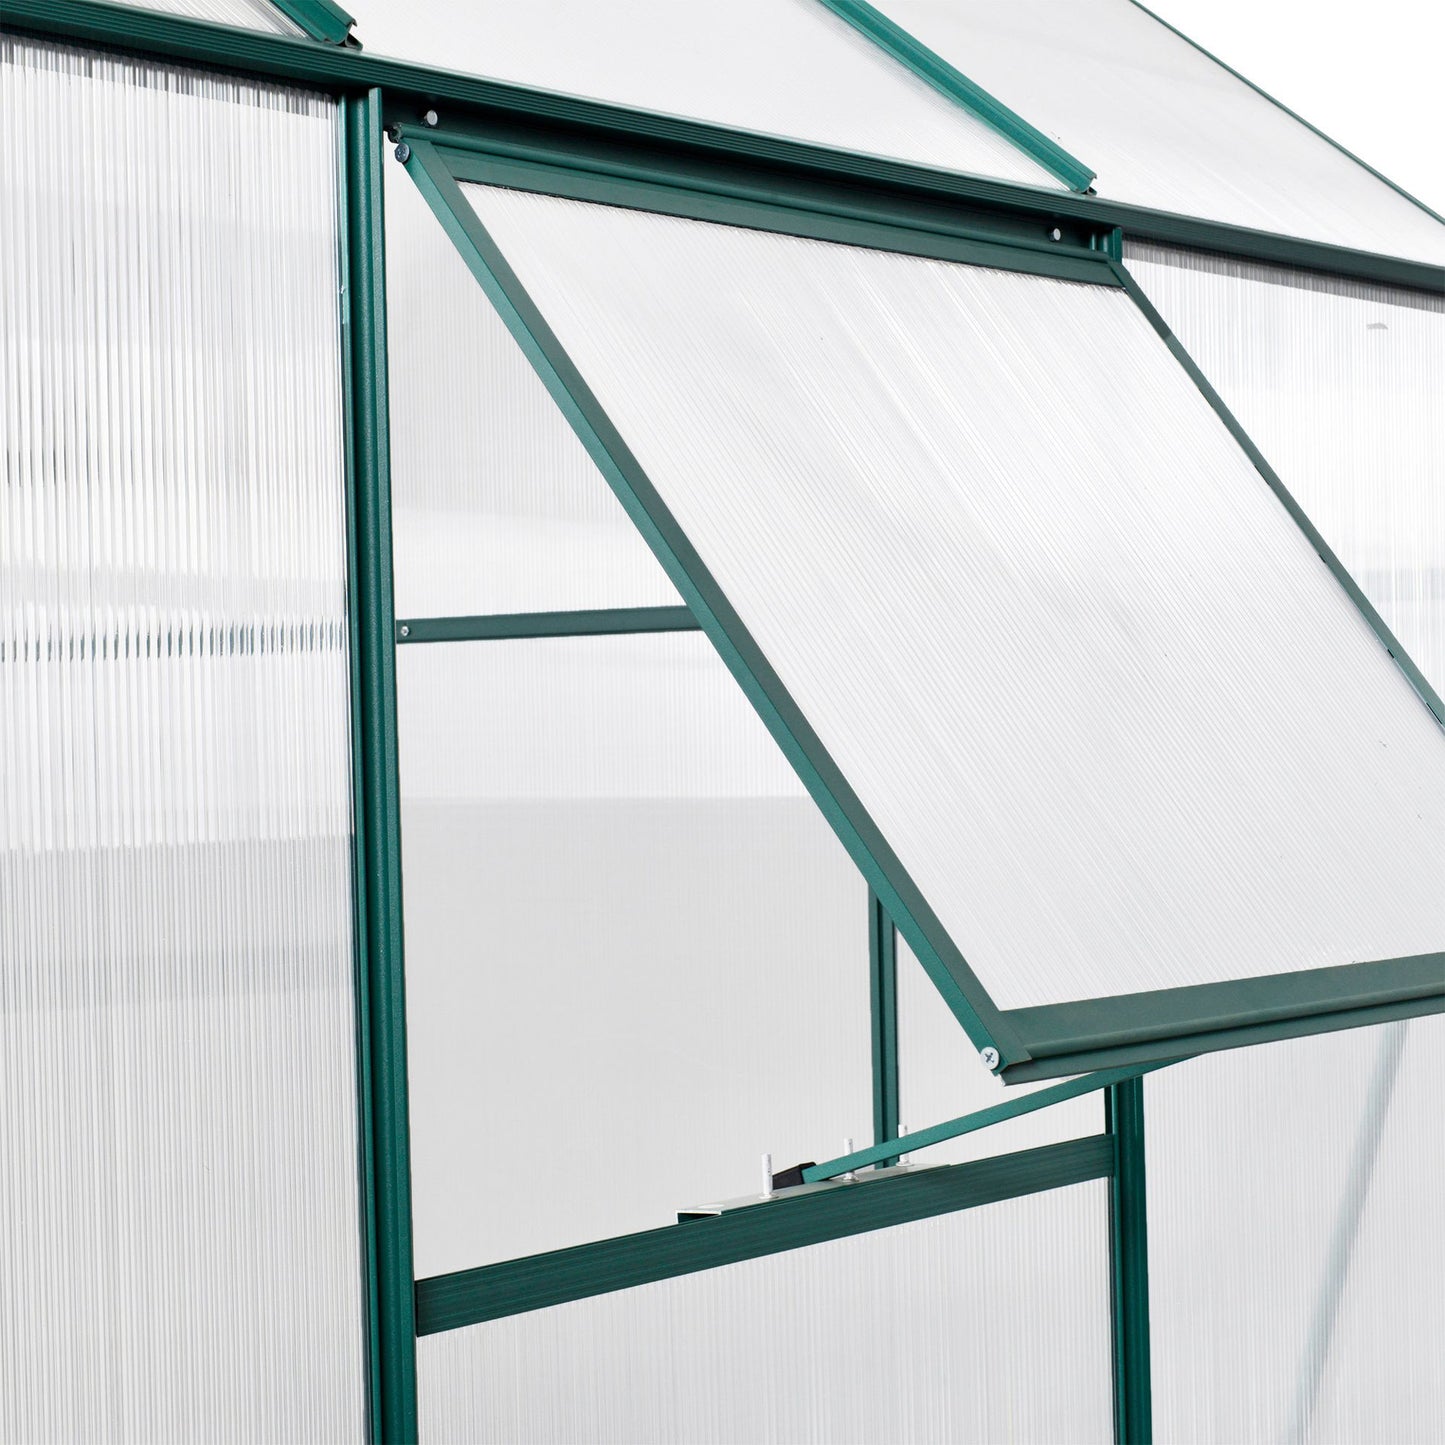 Nancy's Palmar Garden Greenhouse - Growing Greenhouse - Plant Greenhouse - 190 x 190 x 200 cm